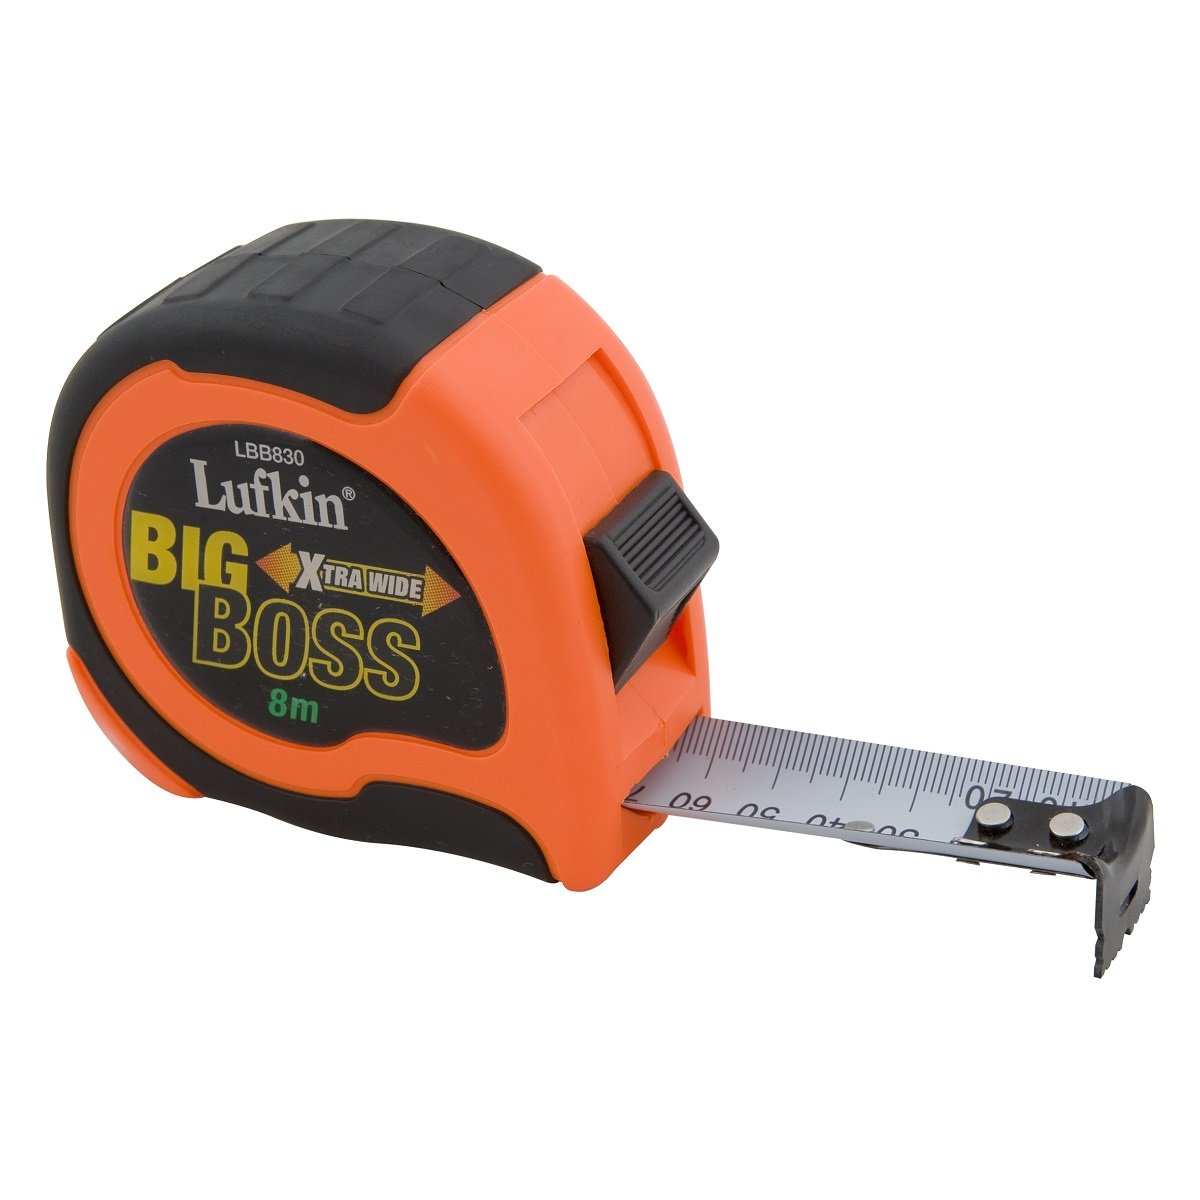 Lufkin XTRA WIDE Tape Measure Big Boss Wide Blade 8M LBB830